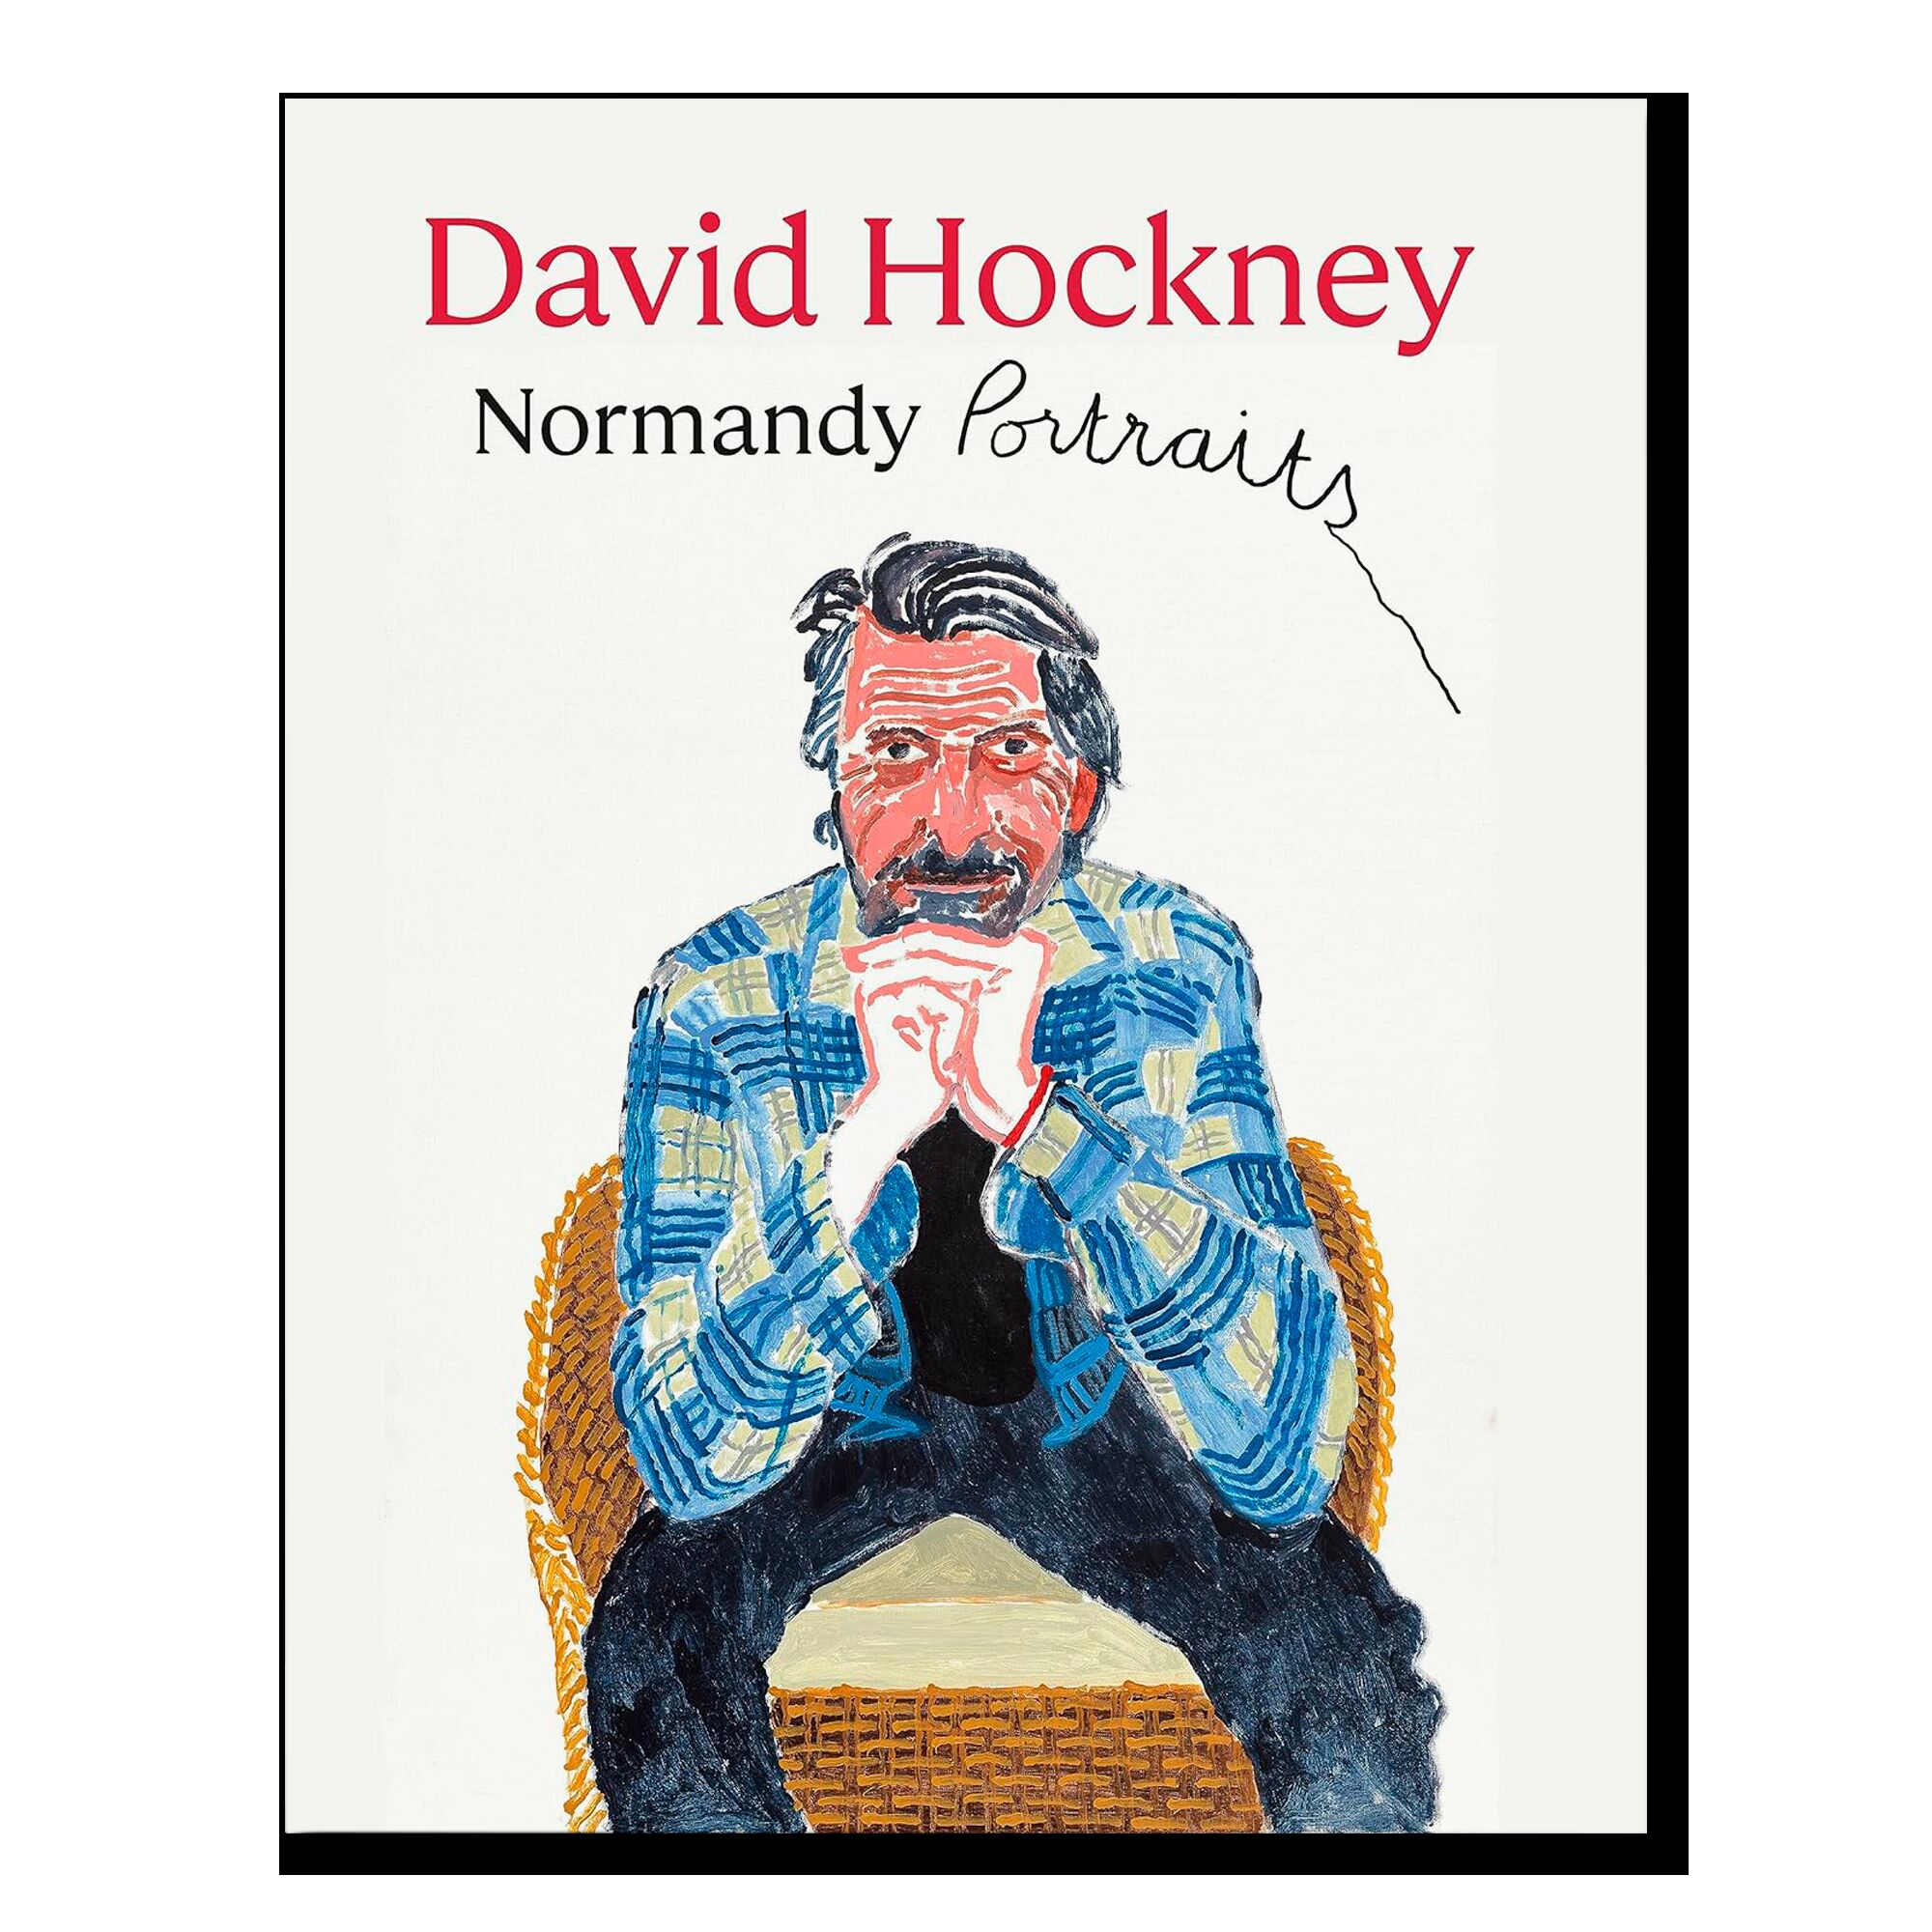 David Hockney: Normandy Portraits